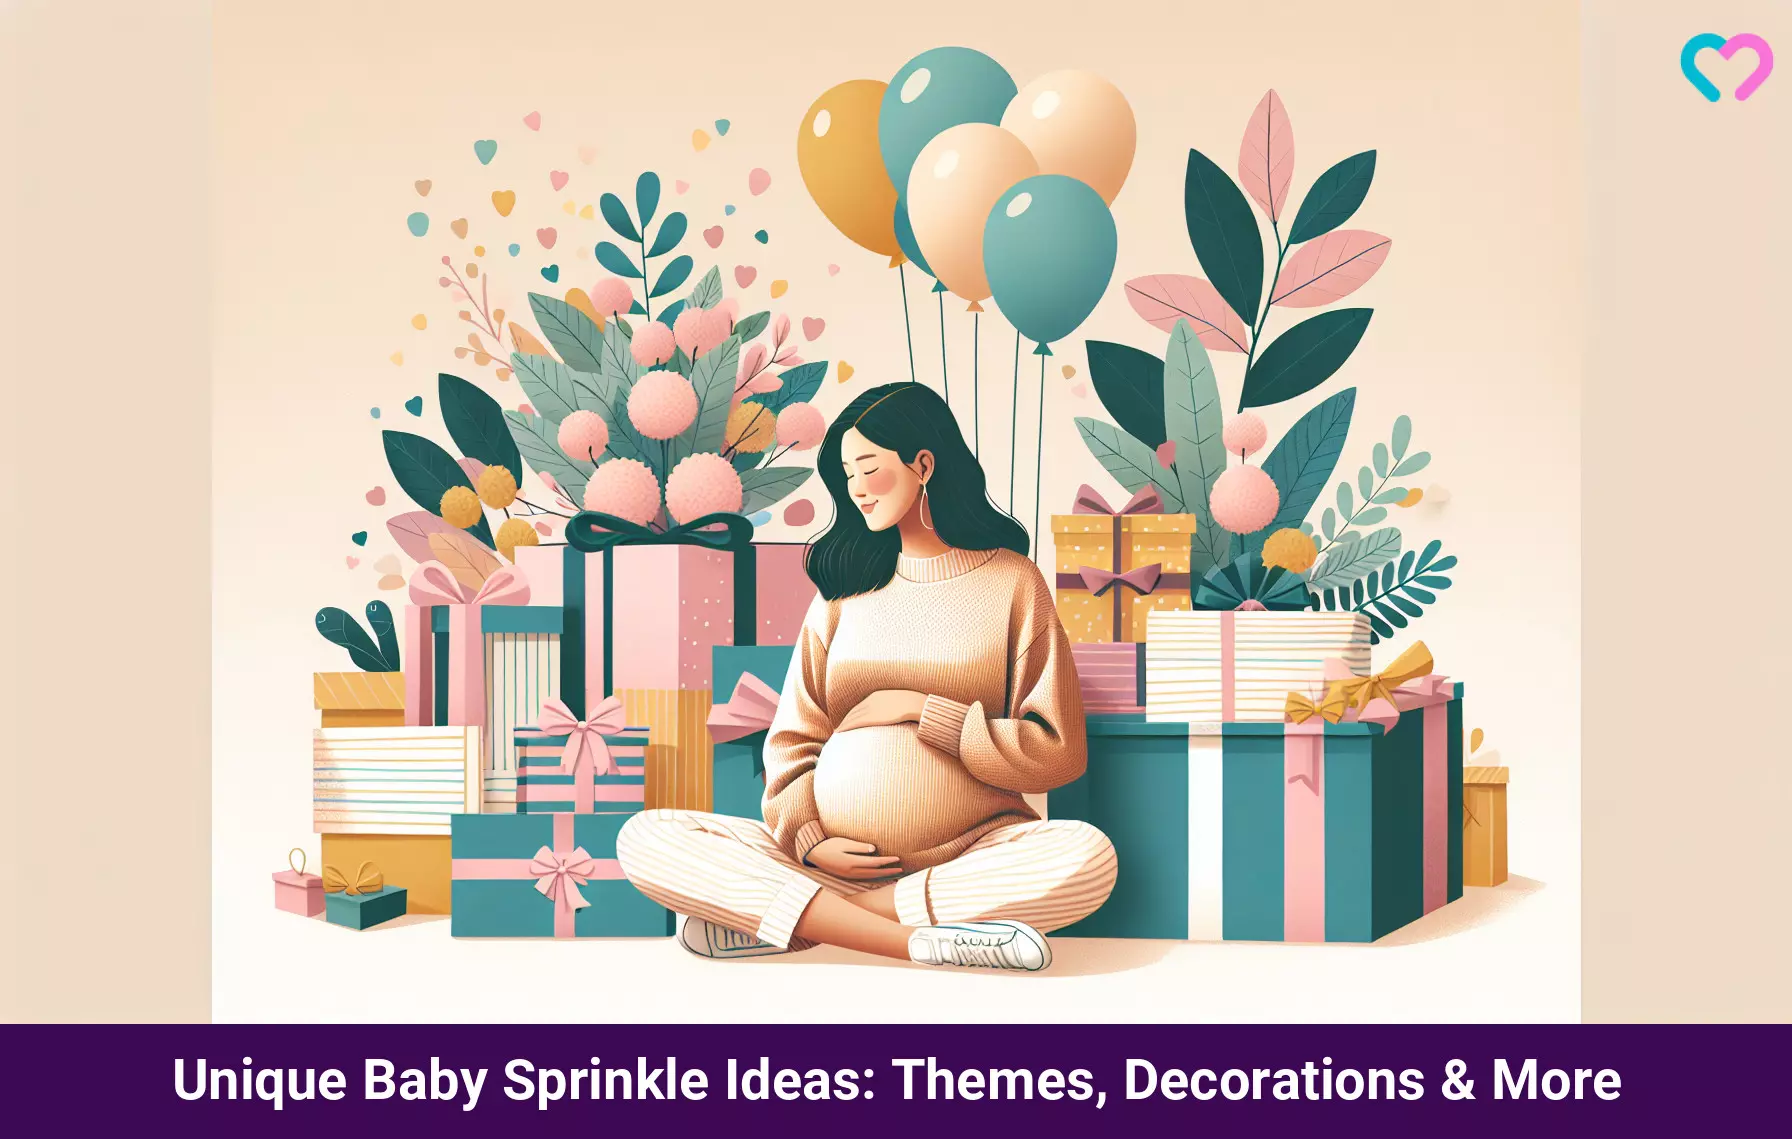 Baby Sprinkle ideas_illustration